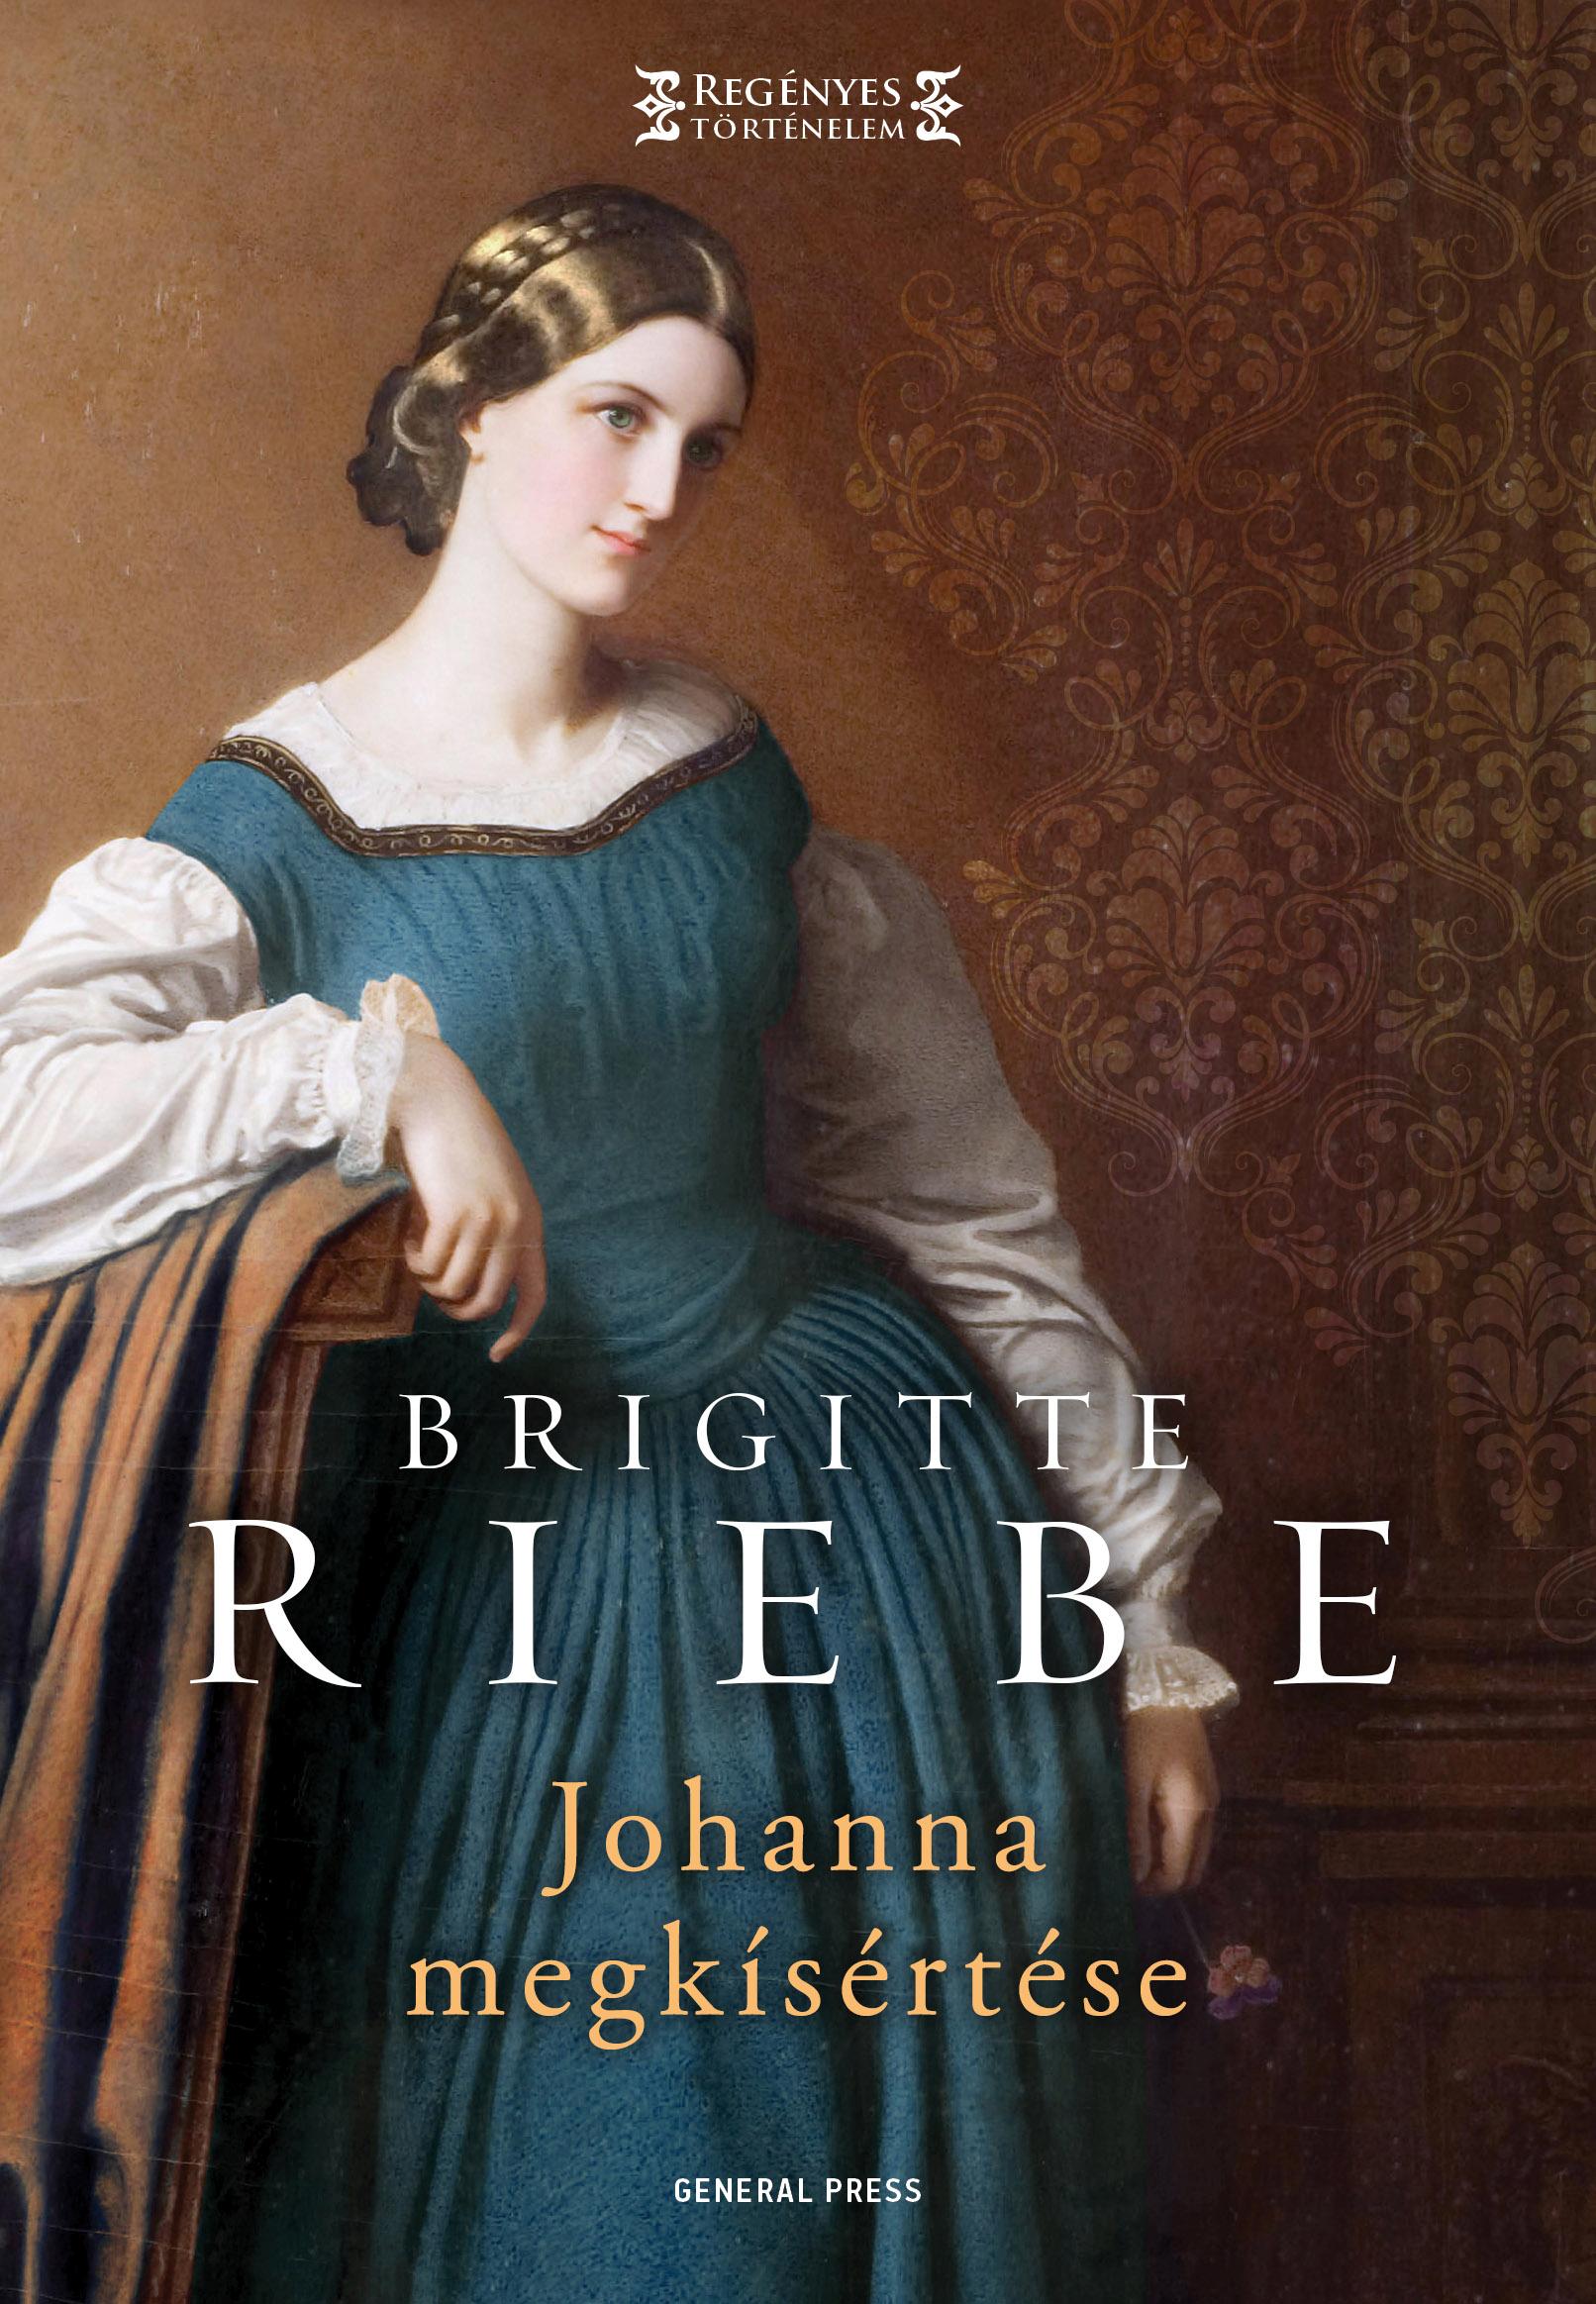 Brigitte Riebe - Johanna megkísértése [outlet]